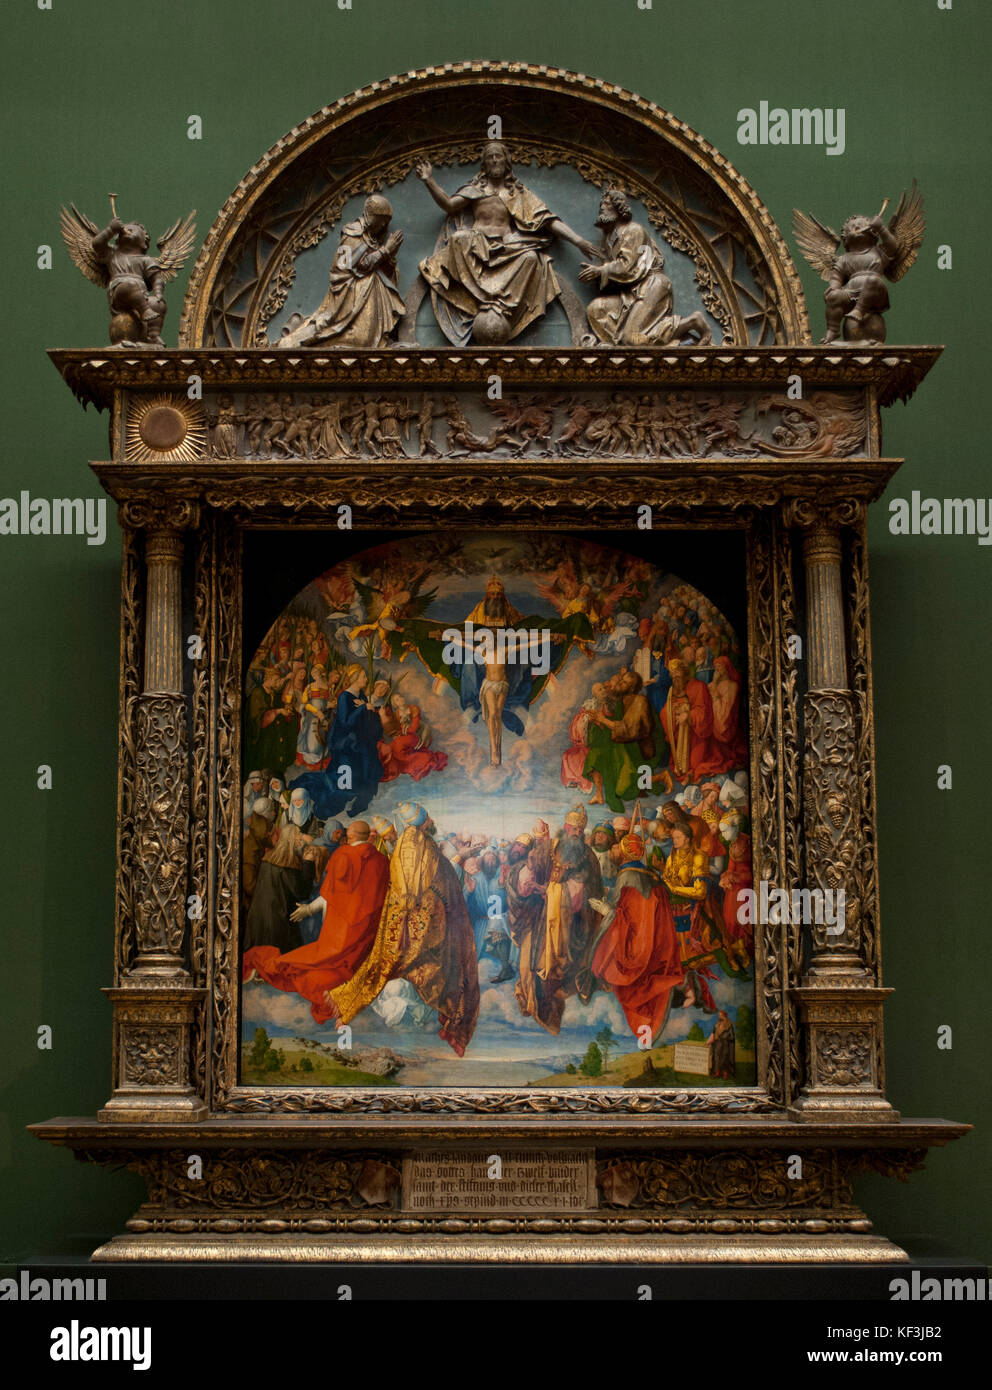 Albrecht Durer. German Renaissance artist. Adoration of the Trinity, 1511. Kunsthistorisches Museum (Art History Museum). Vienna. Austria. Stock Photo